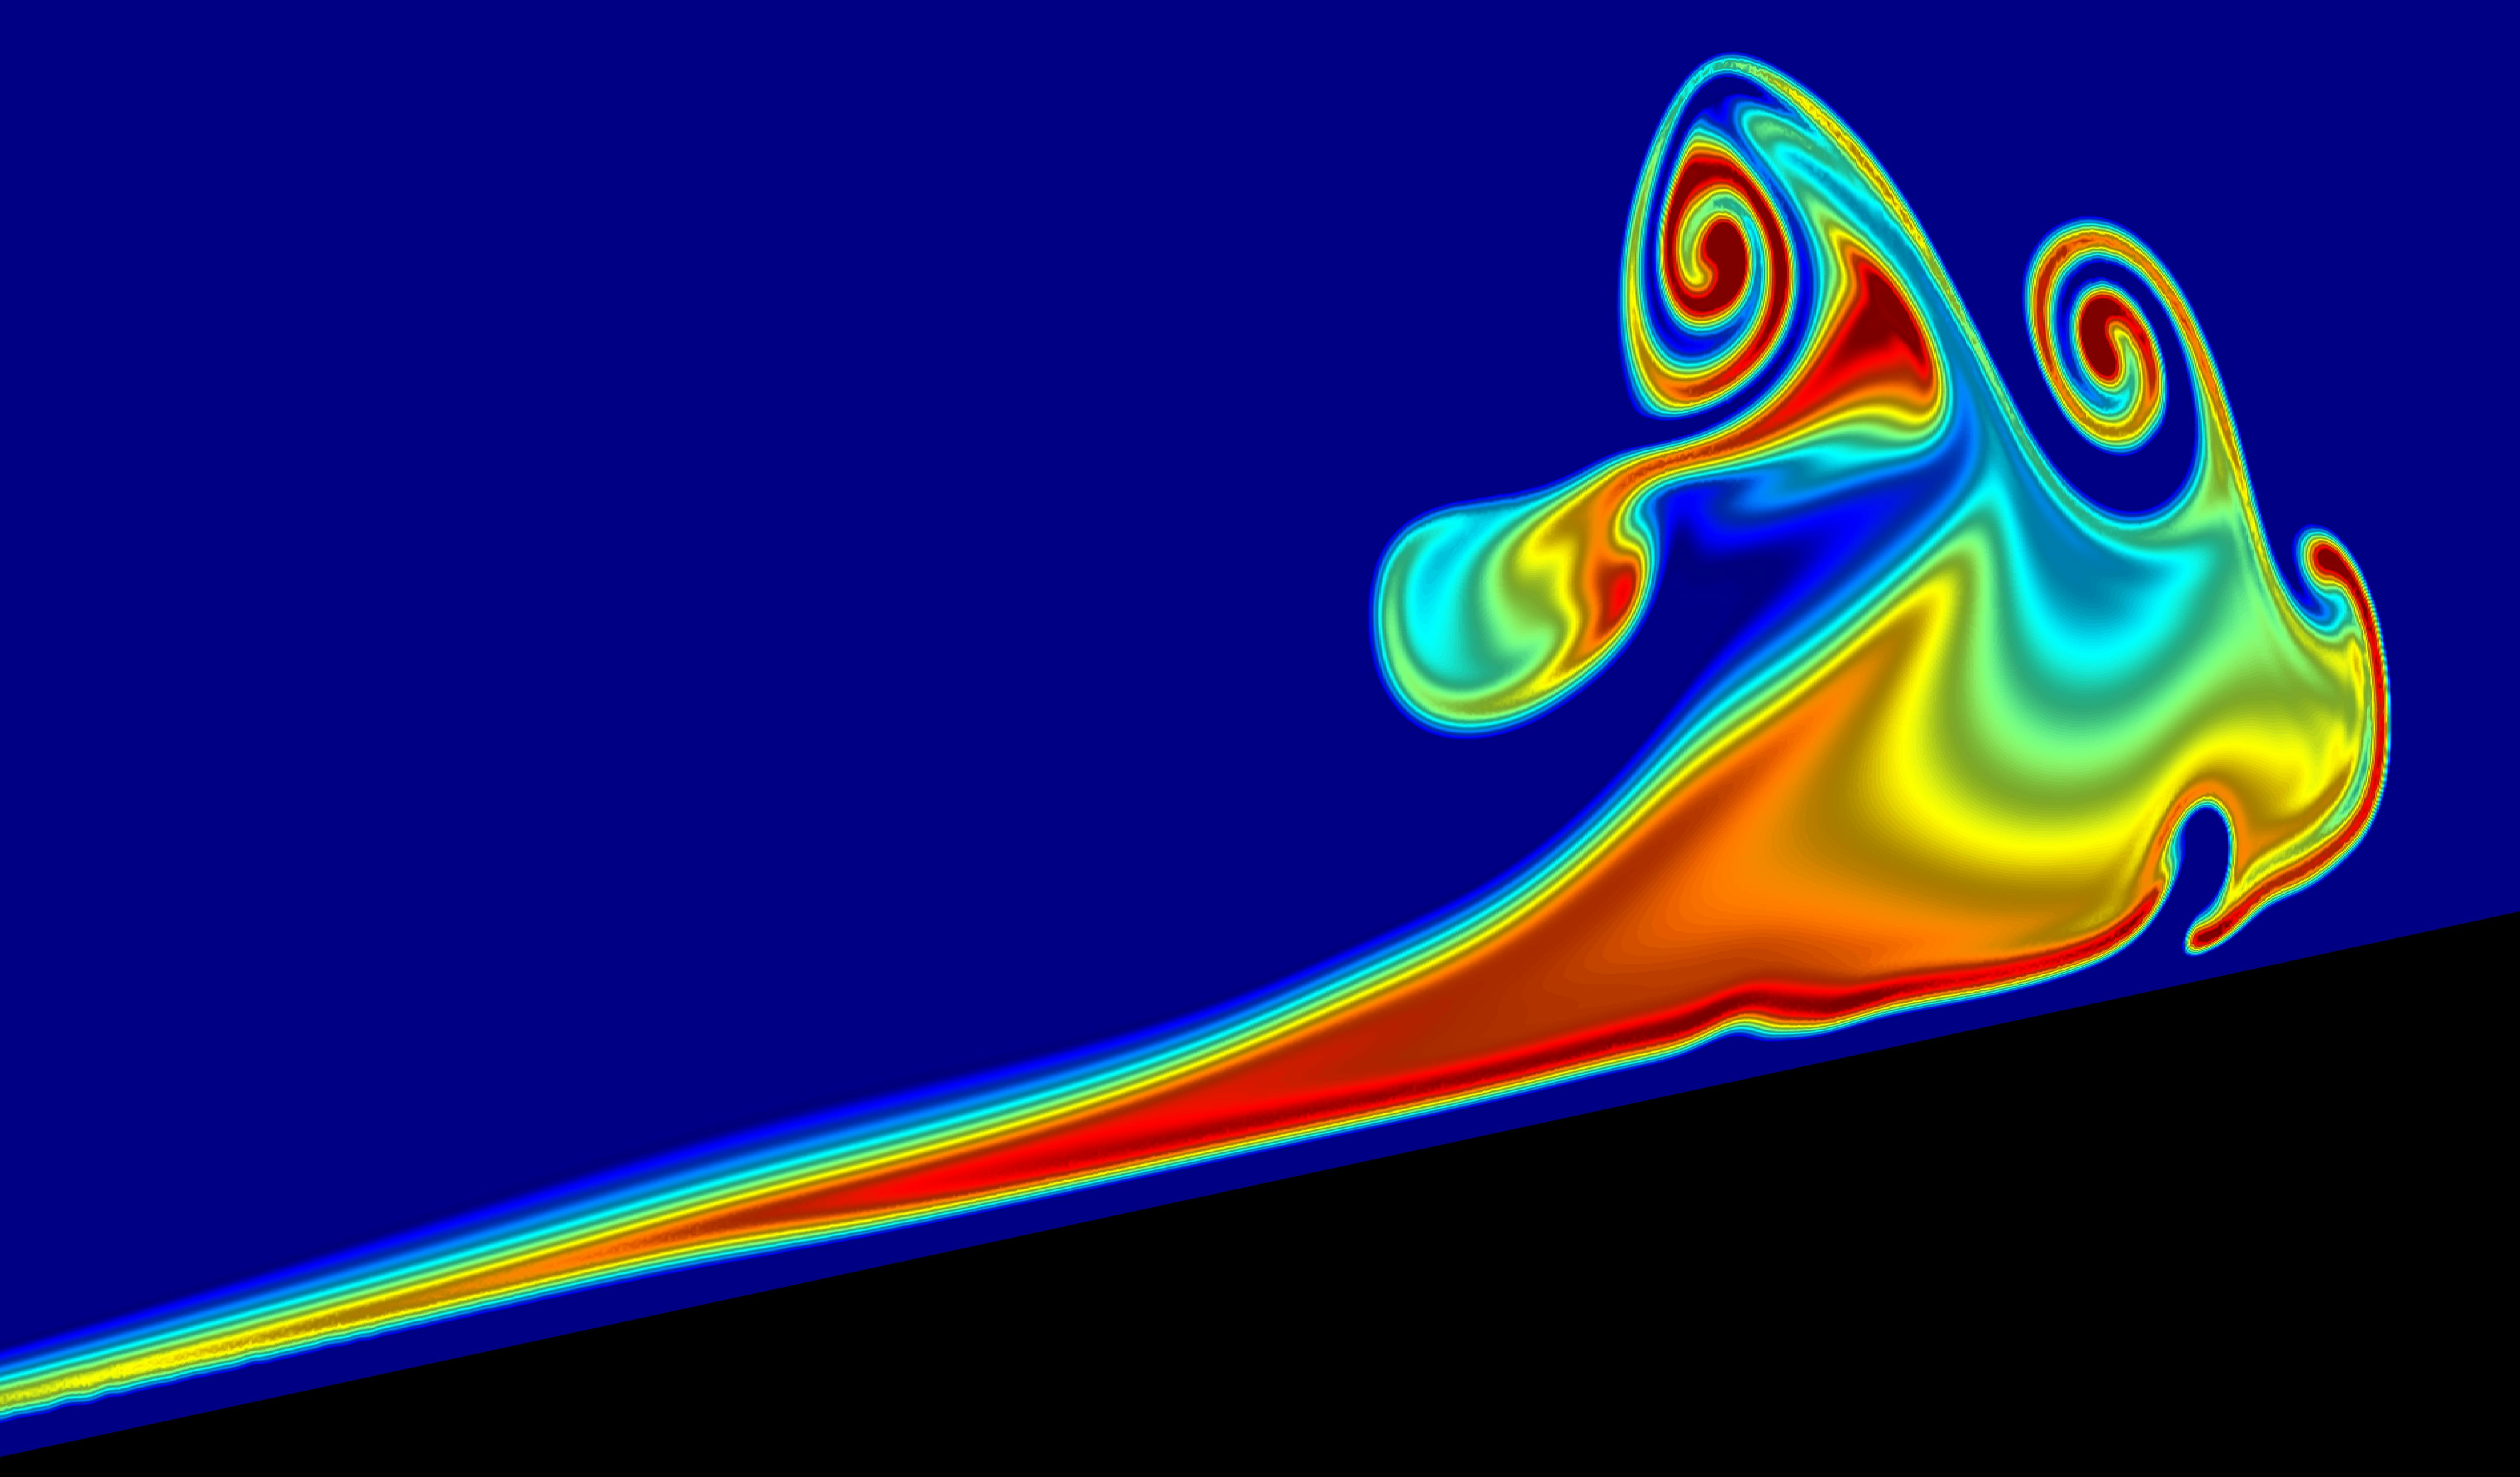 A simulation of subsurface waves crashing.